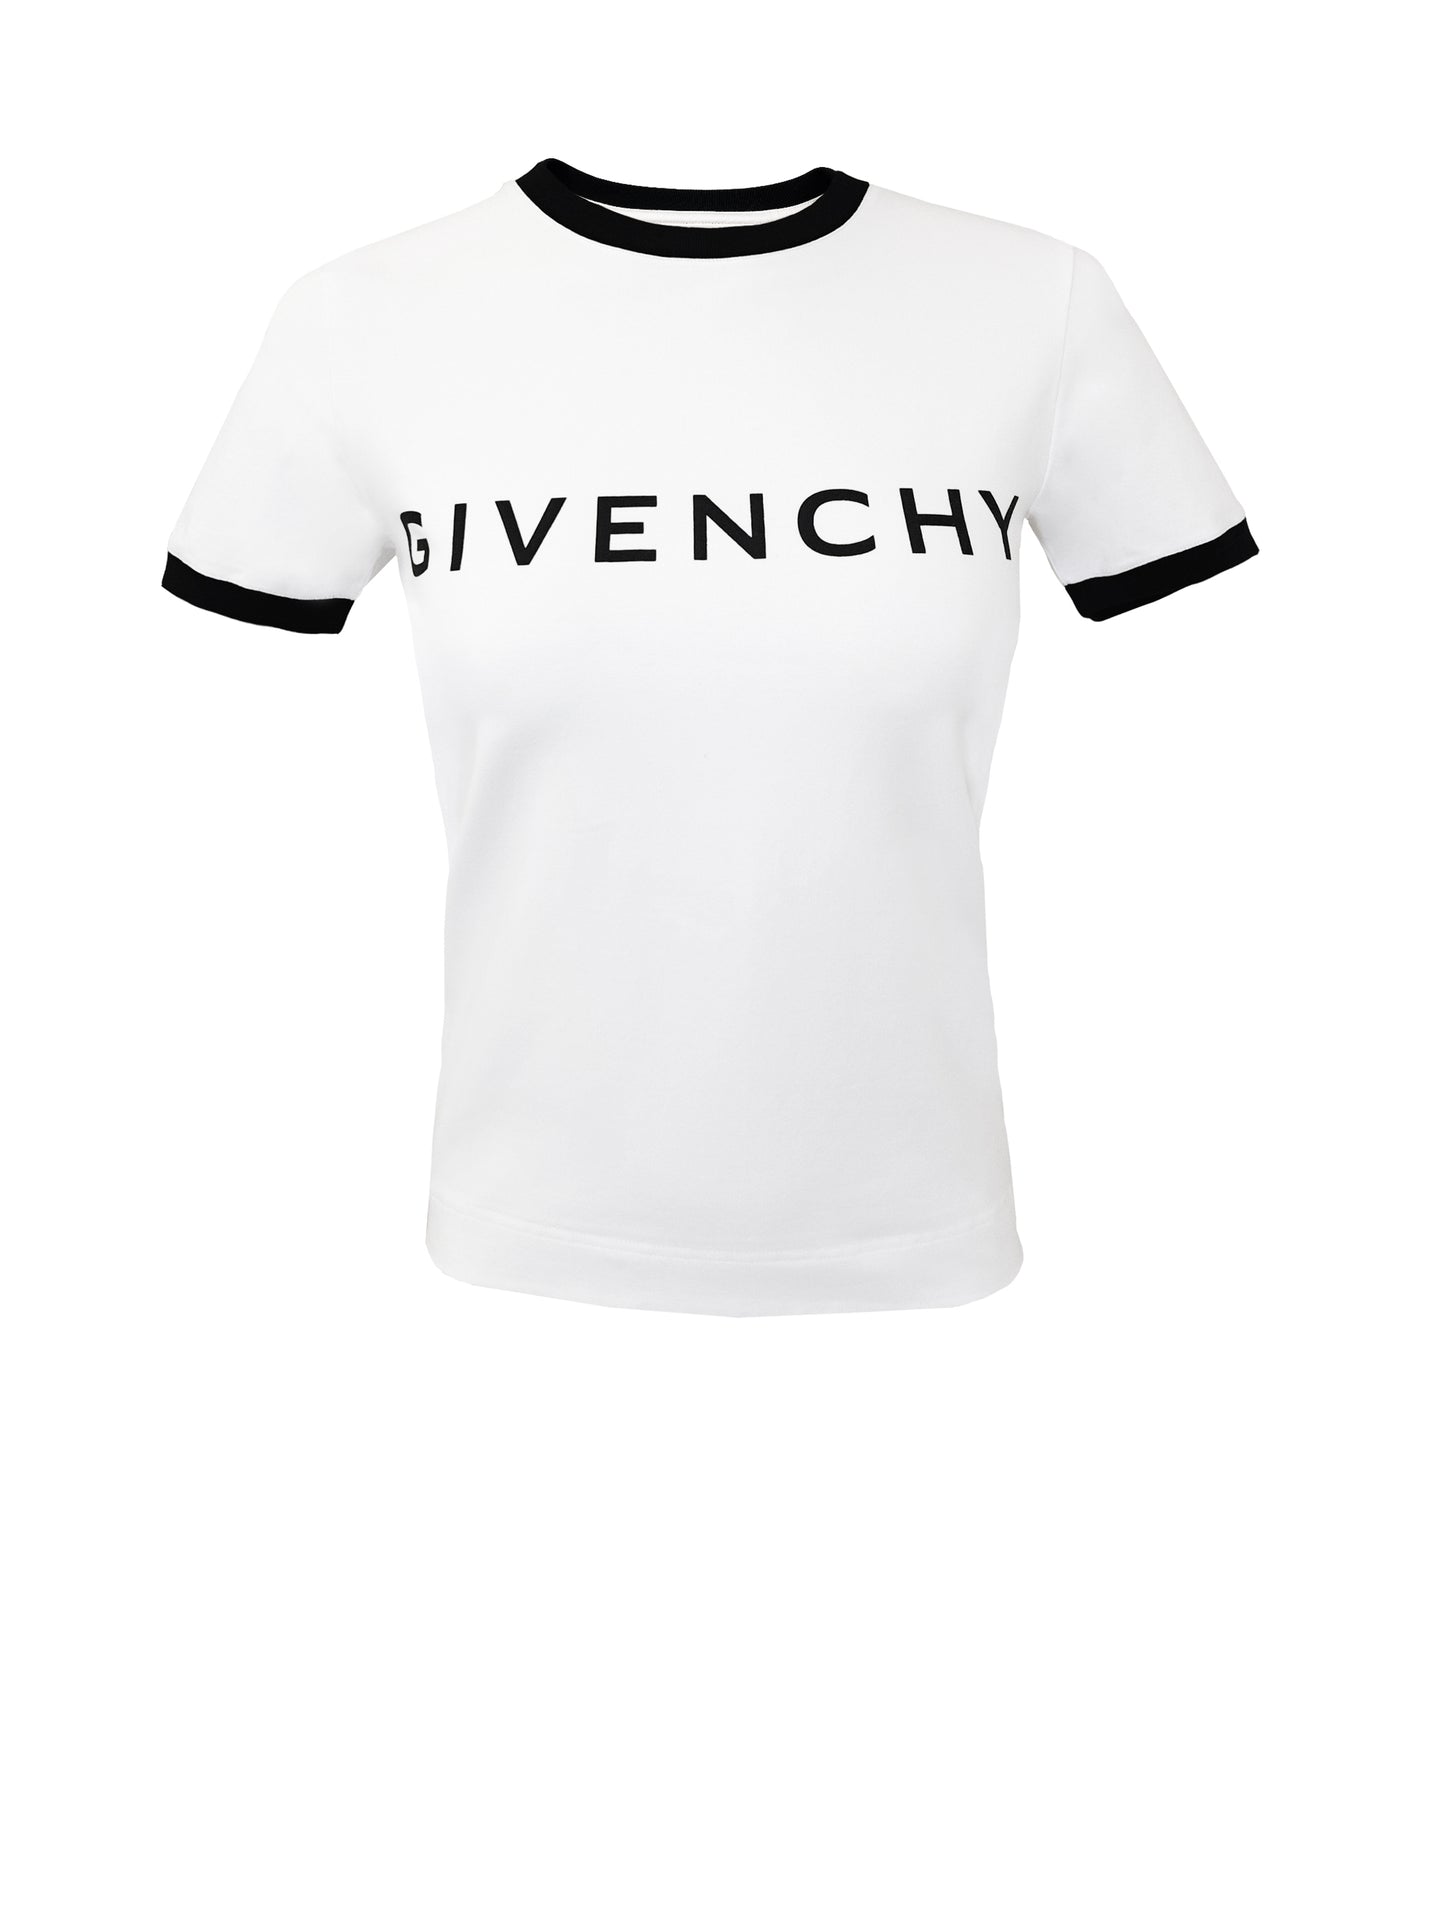 Givenchy T-Shirt Weiss/Schwarz